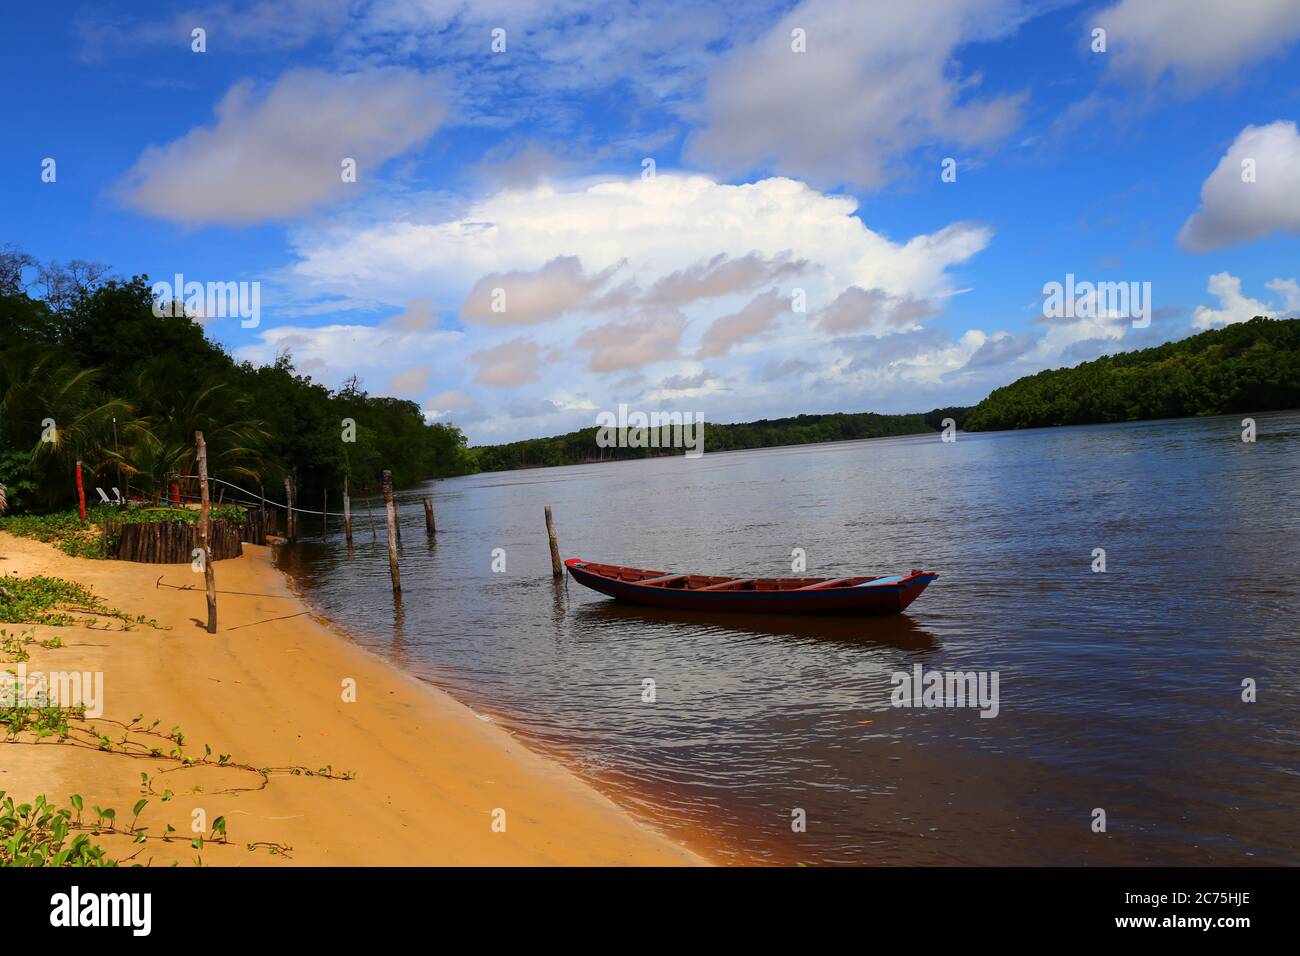 Calm Fluss Preguicas in der Landschaft, Brasilien Stockfoto